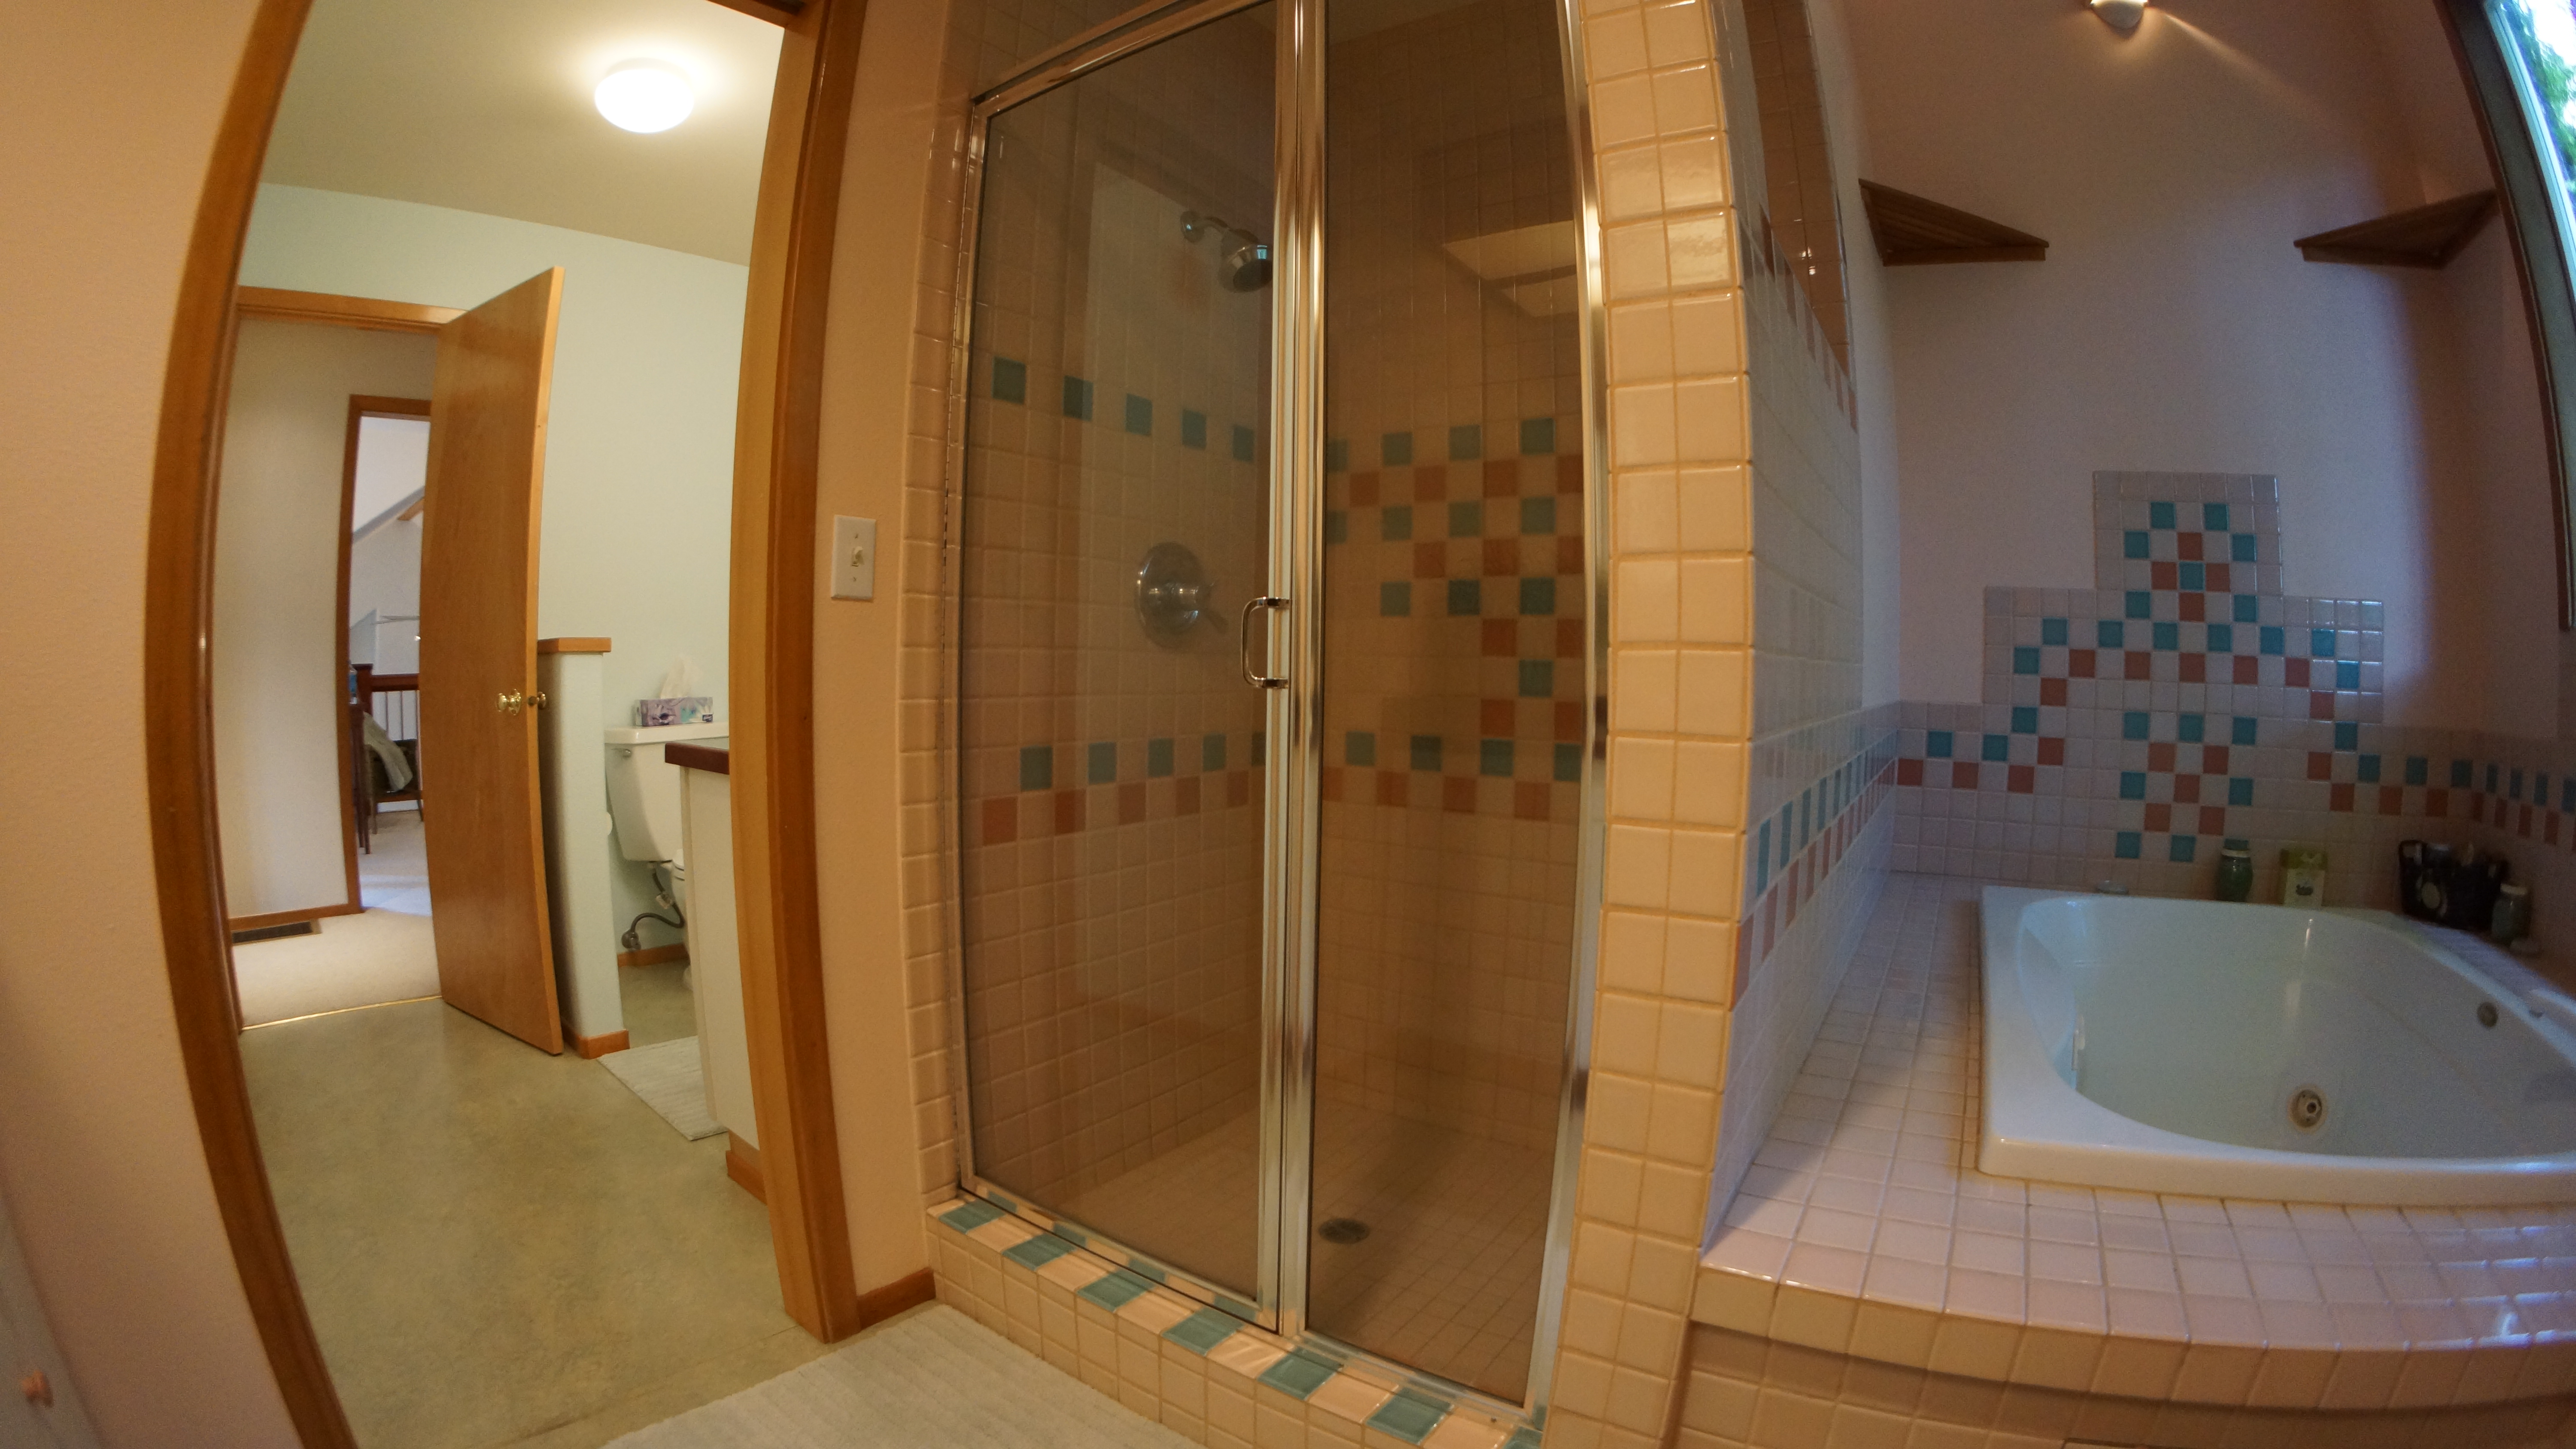 Bathroom, Shower, and genuine Jacuzzi Tub.